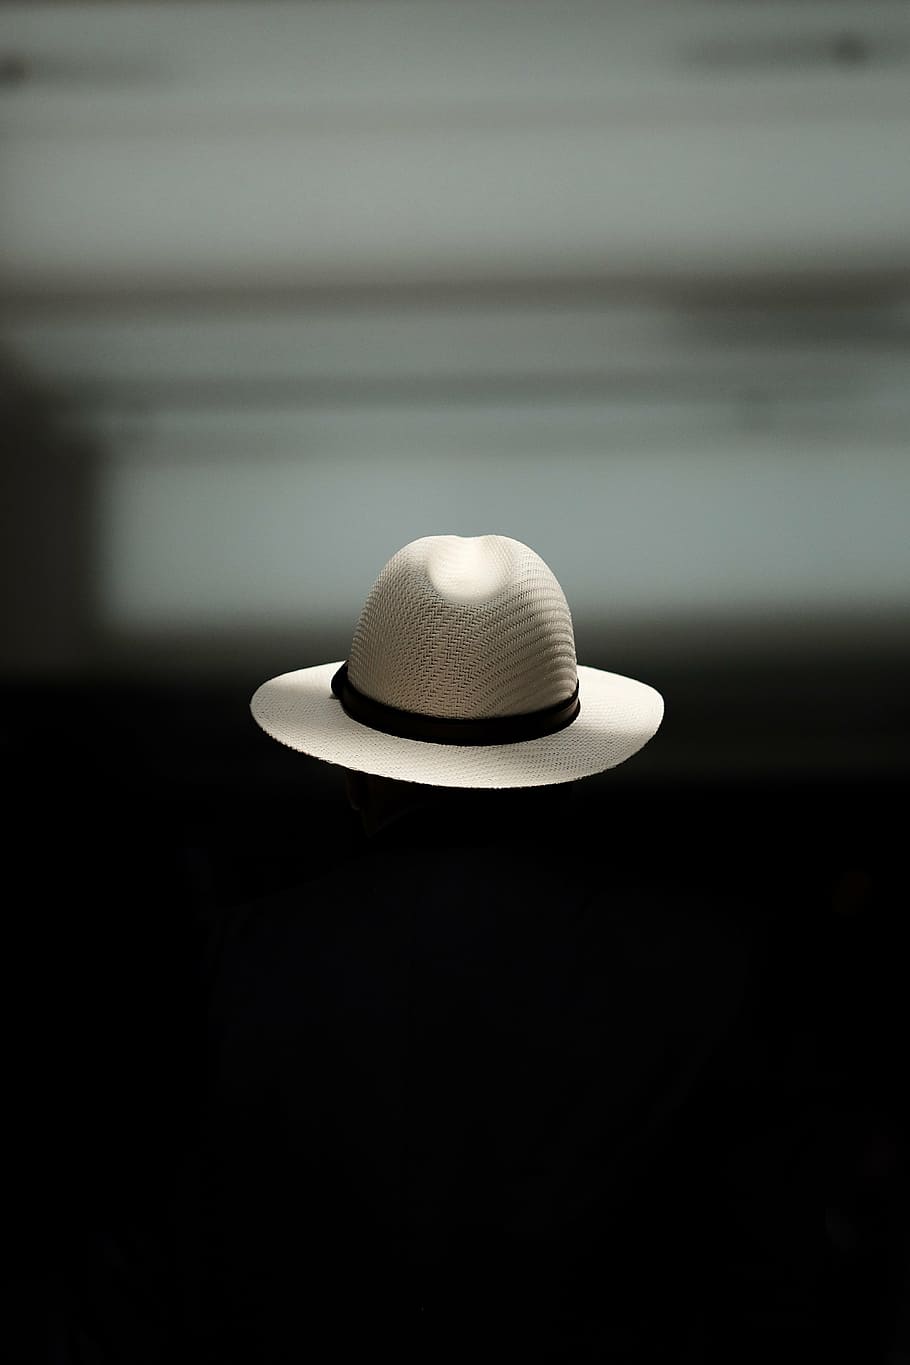 hat, black, background wallpaper, people, dark, room, cap, fashion, indoors, lighting equipment